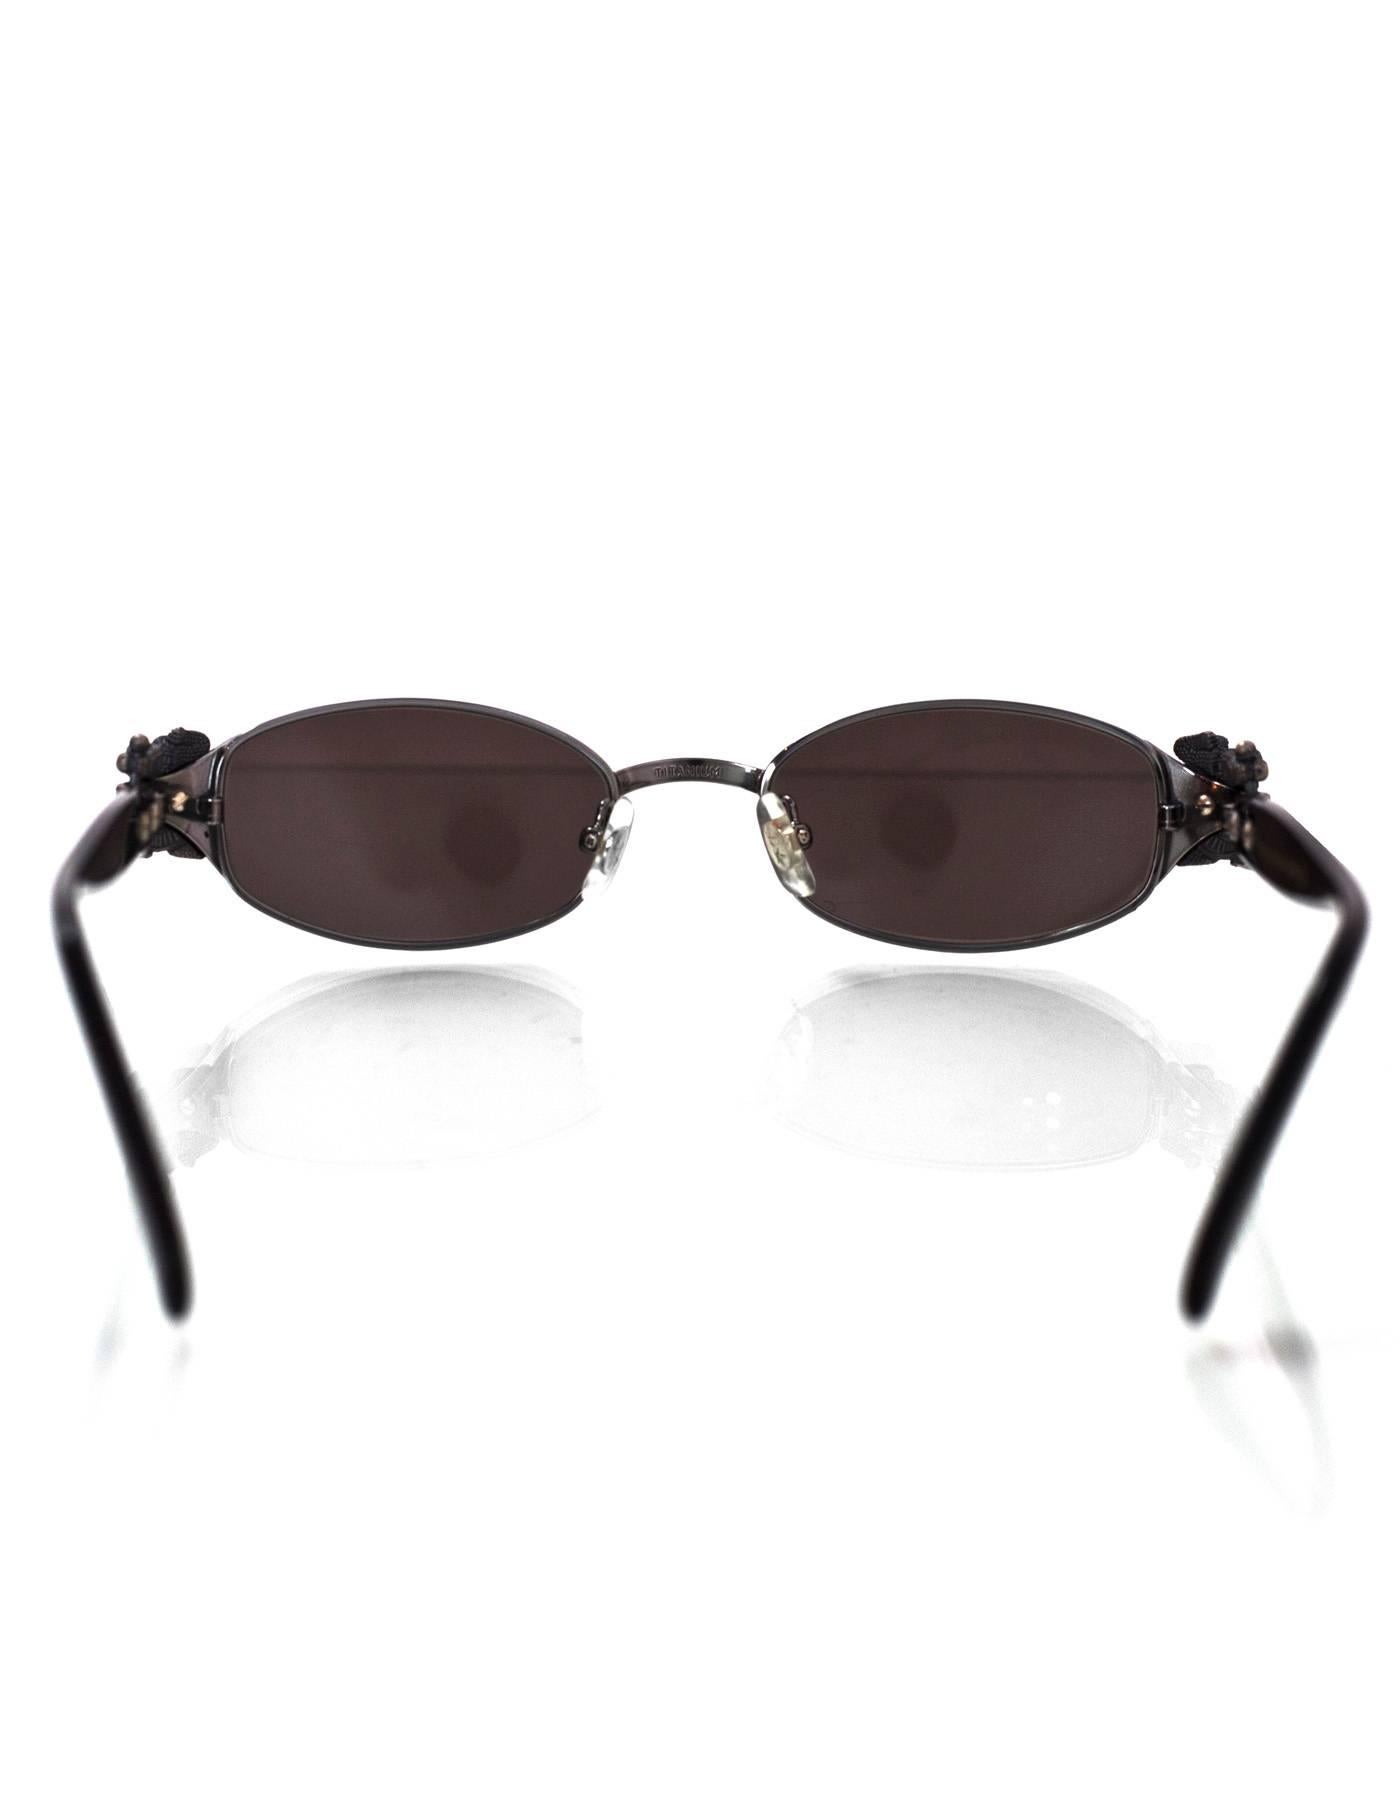 Women's Kieselstein-Cord Black Small Le Croc Titanium Sunglasses with Case